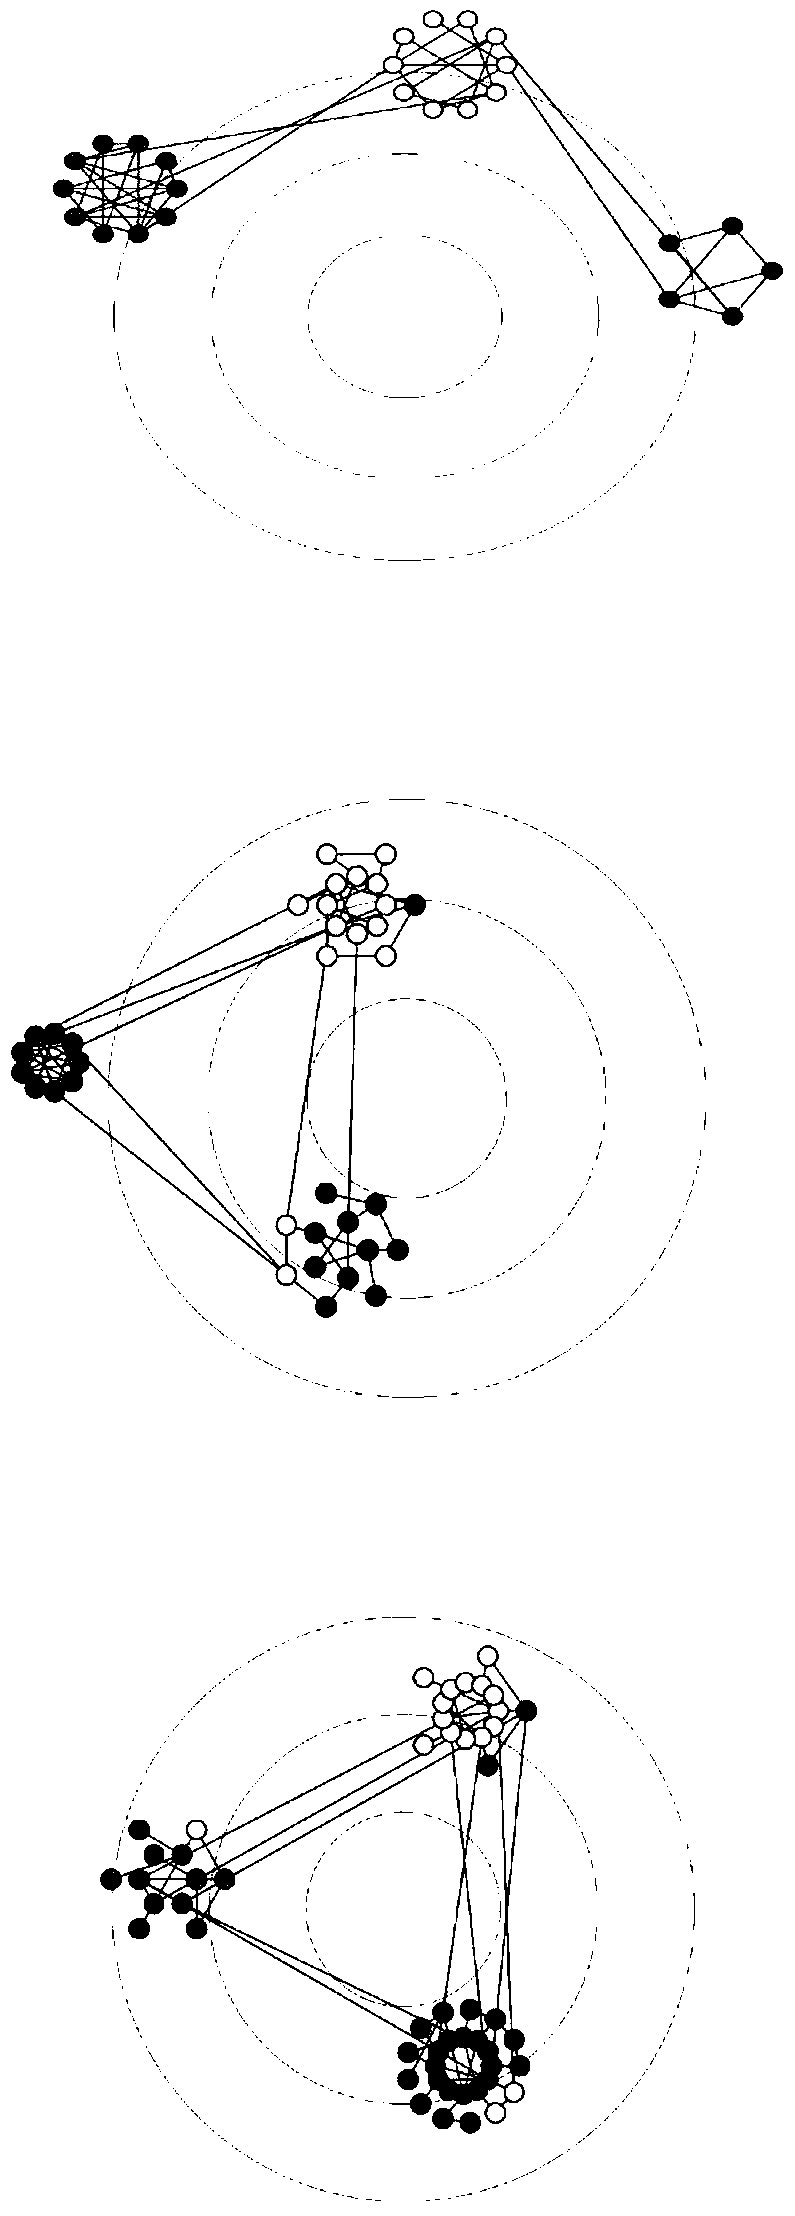 A Time-varying Network Community Evolution Visualization Method Introducing Quantitative Indicators